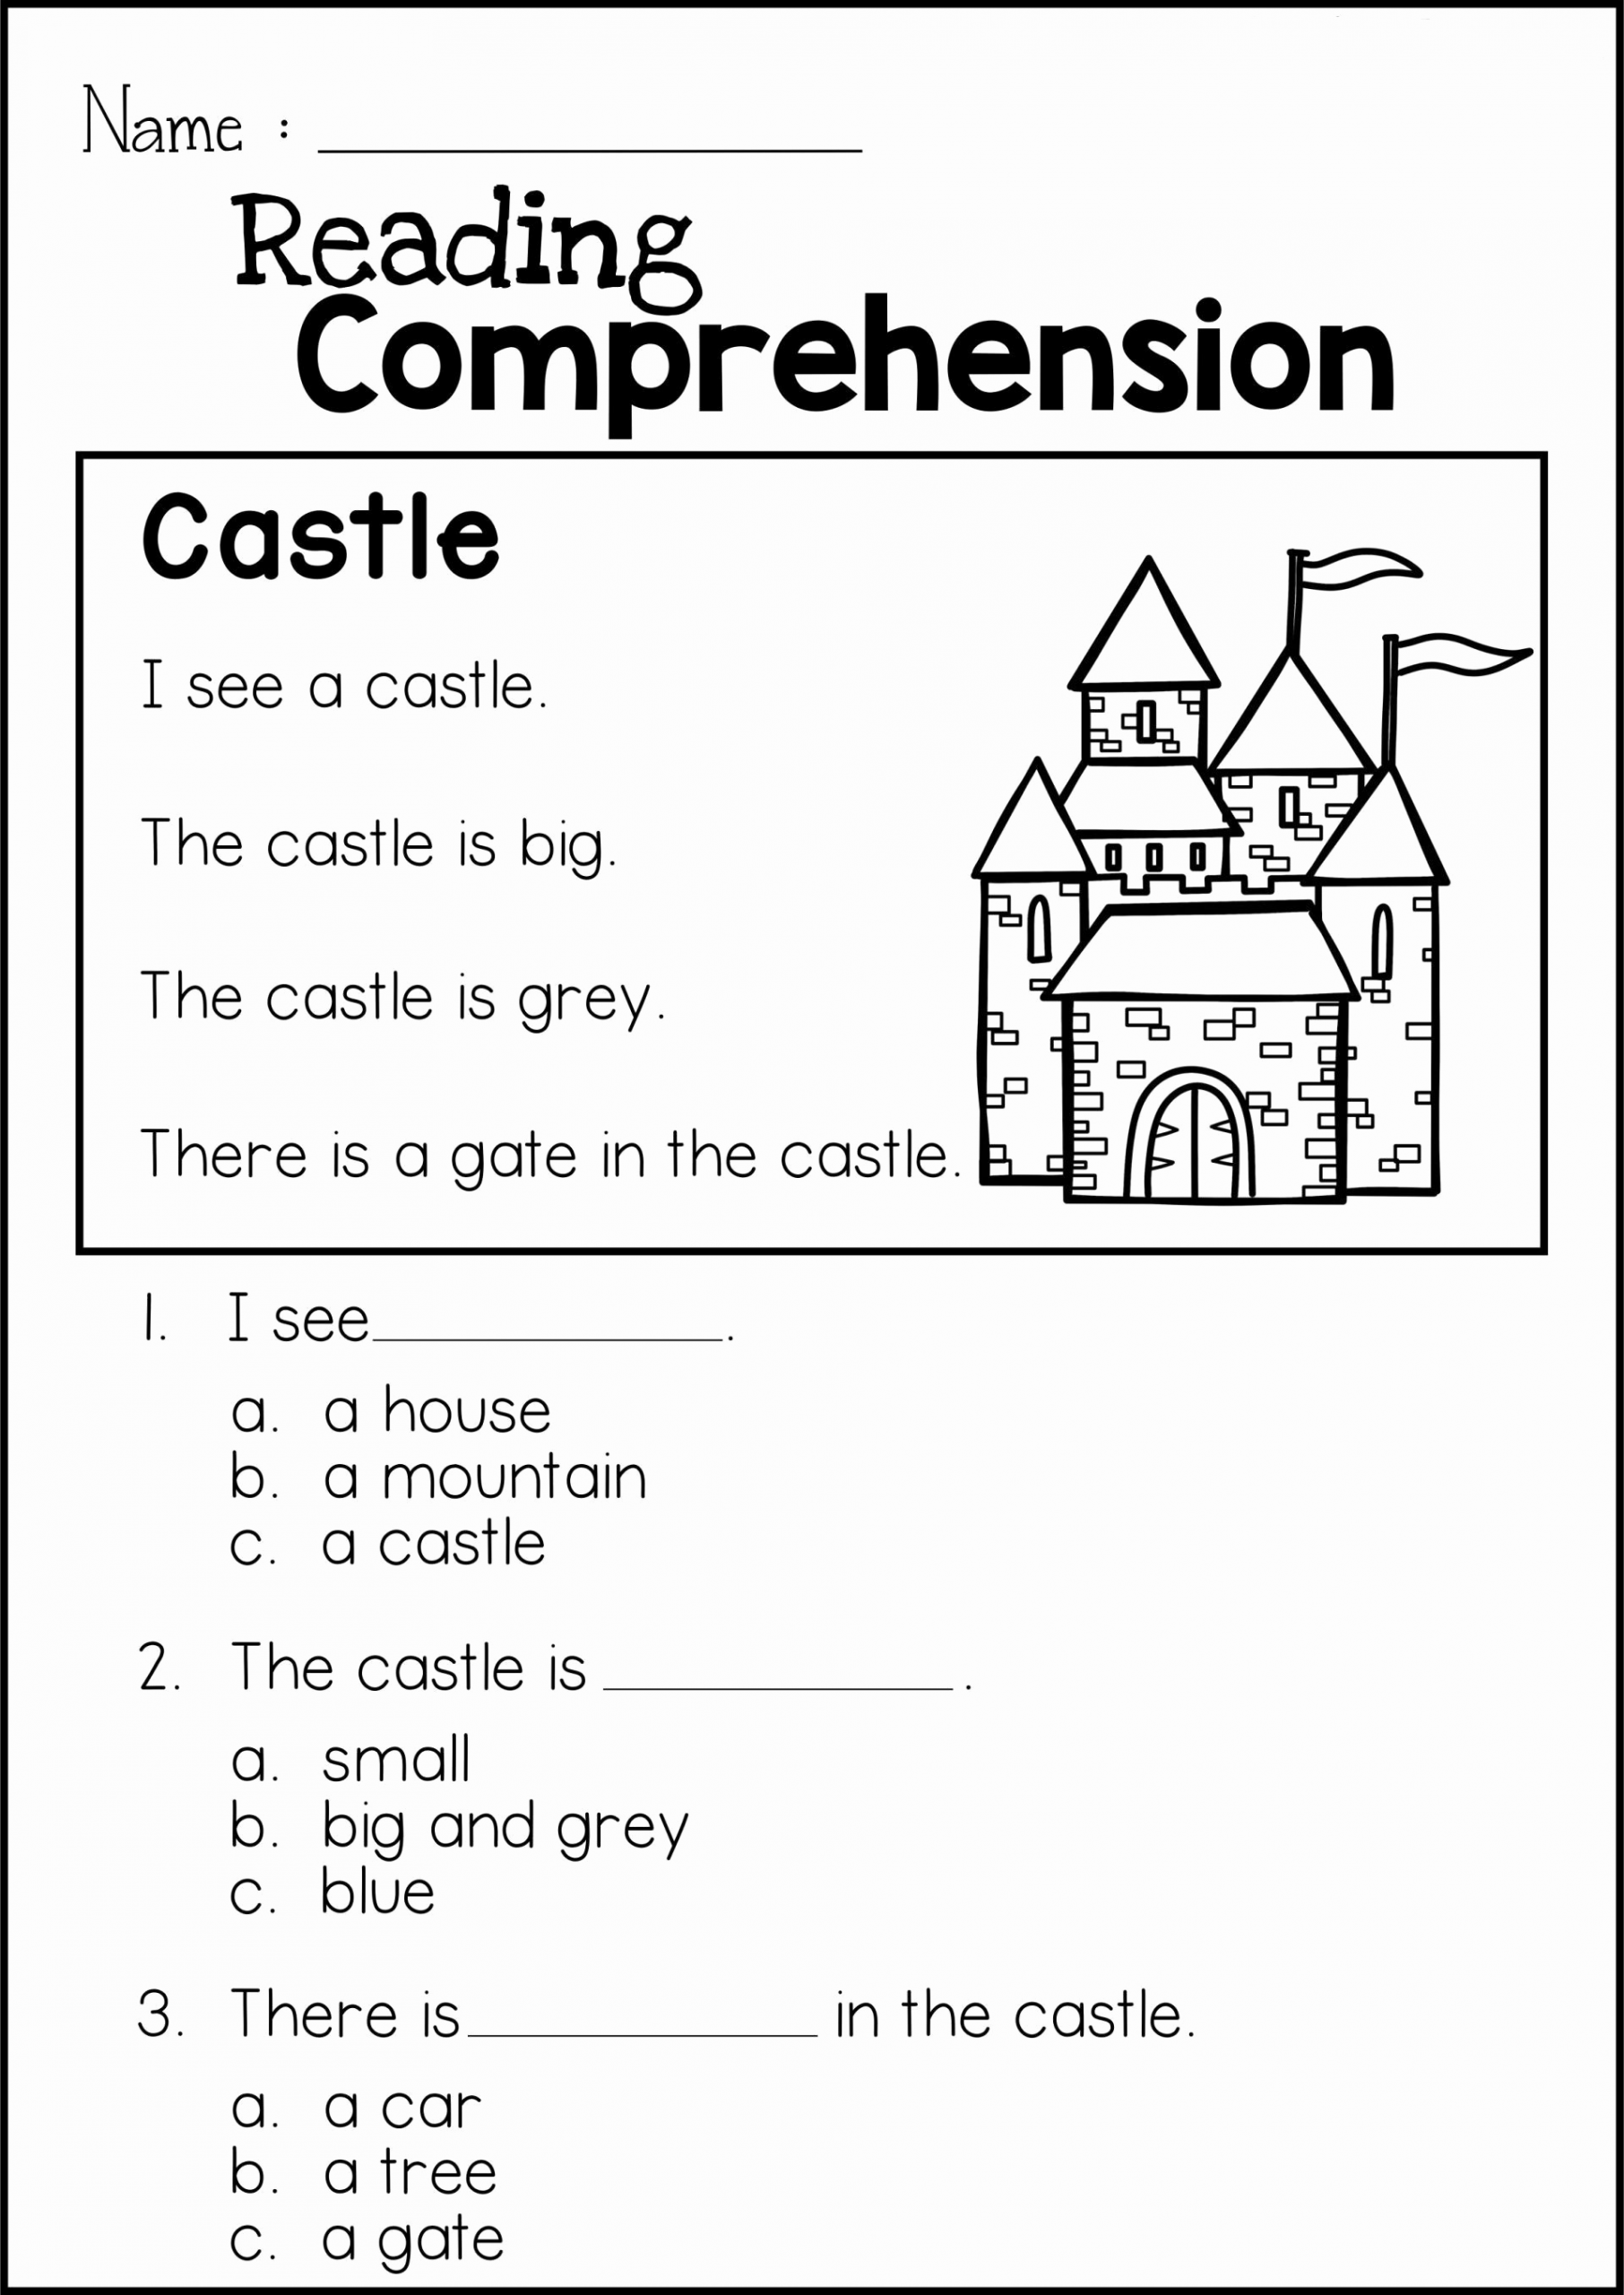 Comprehension Worksheet First Grade Luxury 1st Grade English Worksheets Best Coloring Pages for Kids